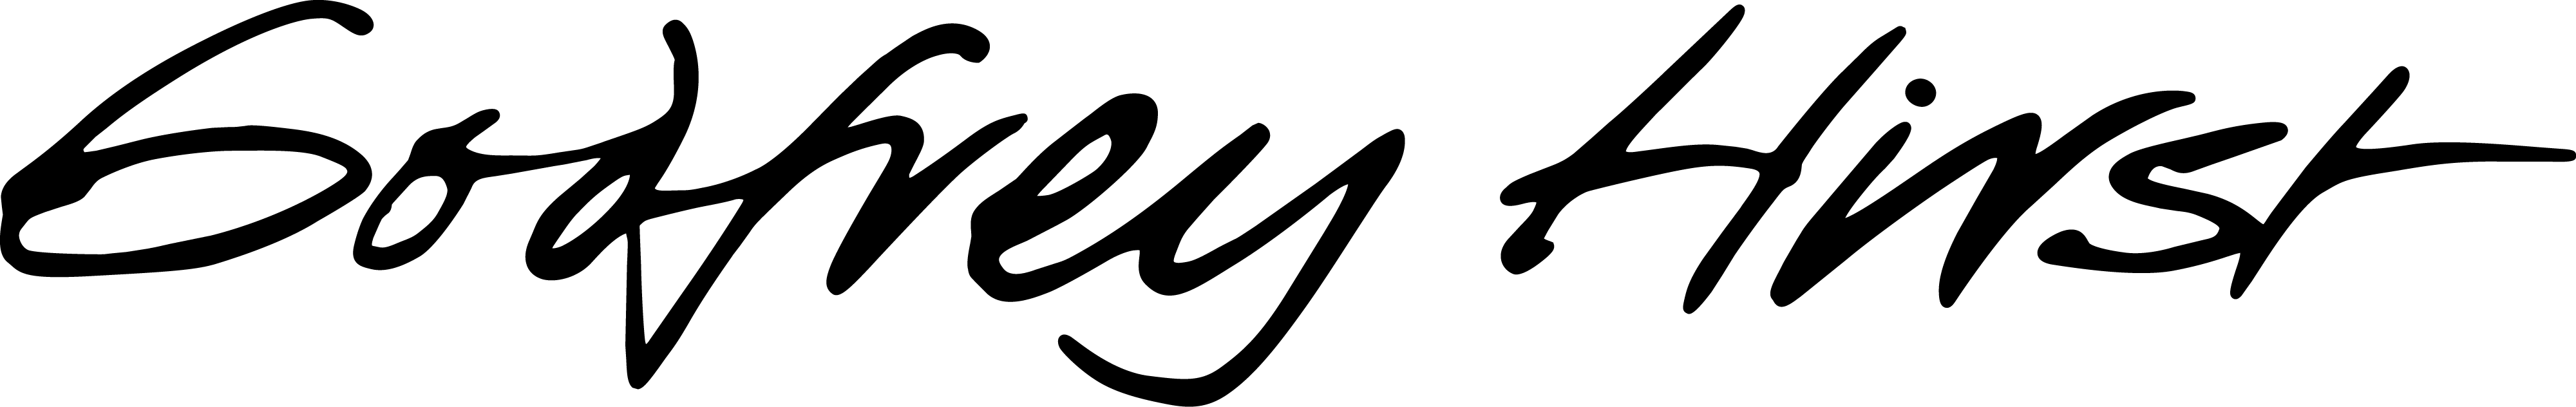 Hist_Black_logo